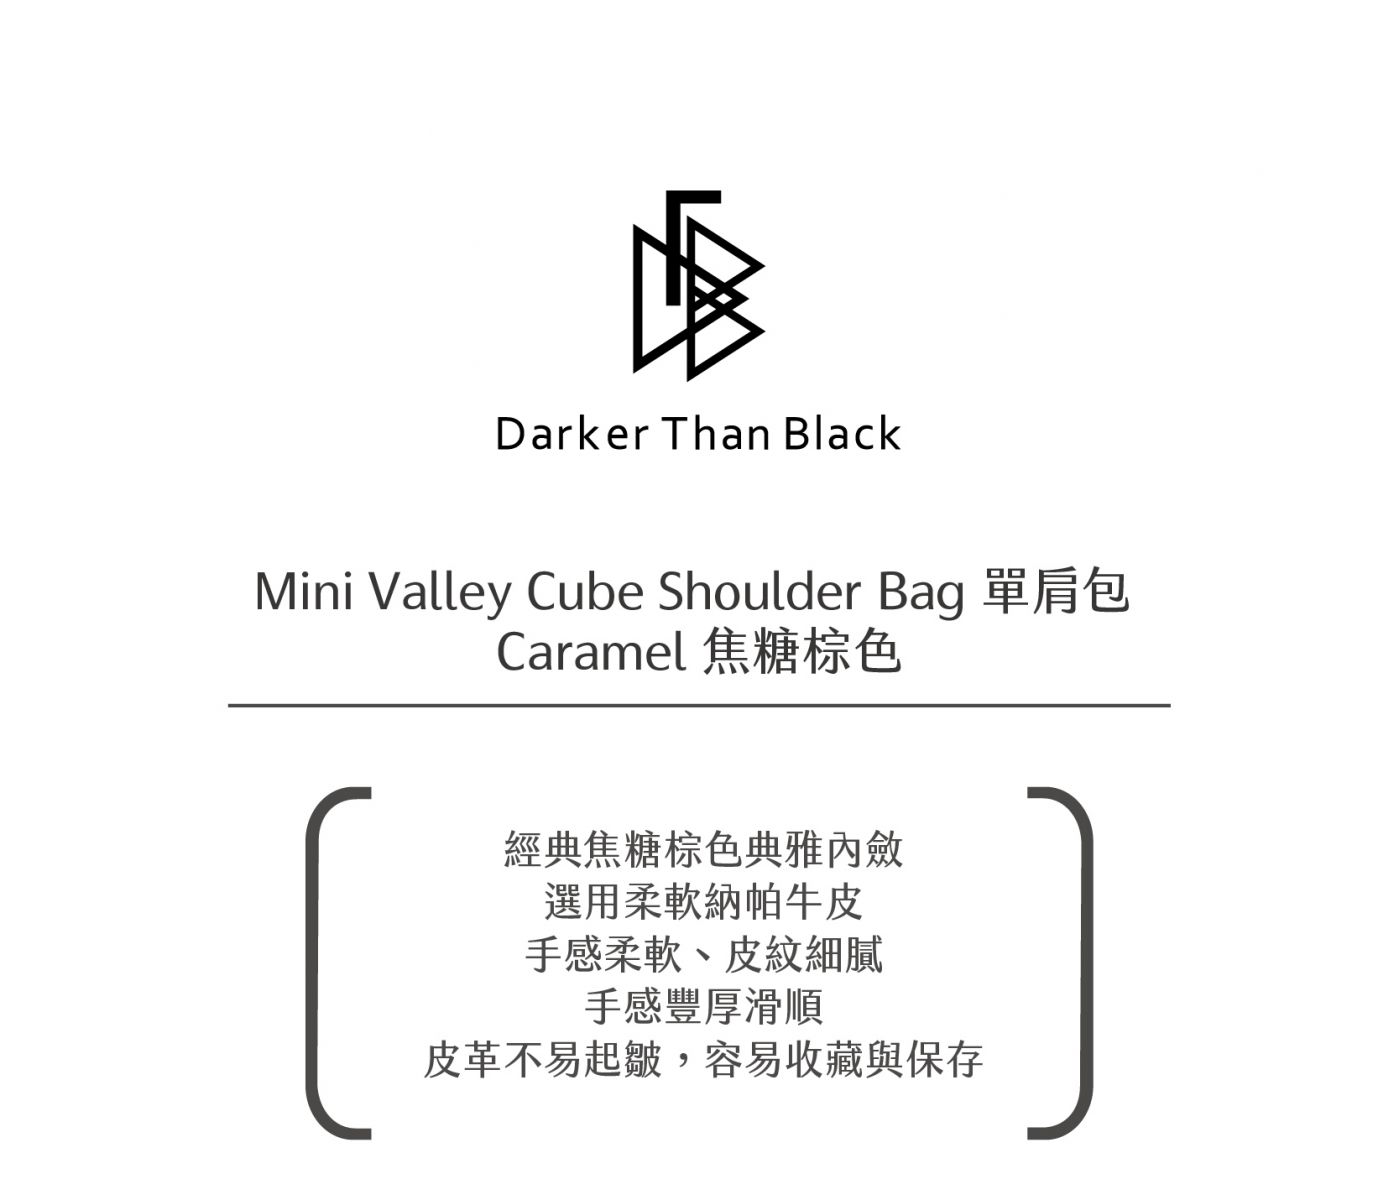 Mini Valley Cube Shoulder 迷你方型軟包(納帕牛皮) - Caramel焦糖棕色